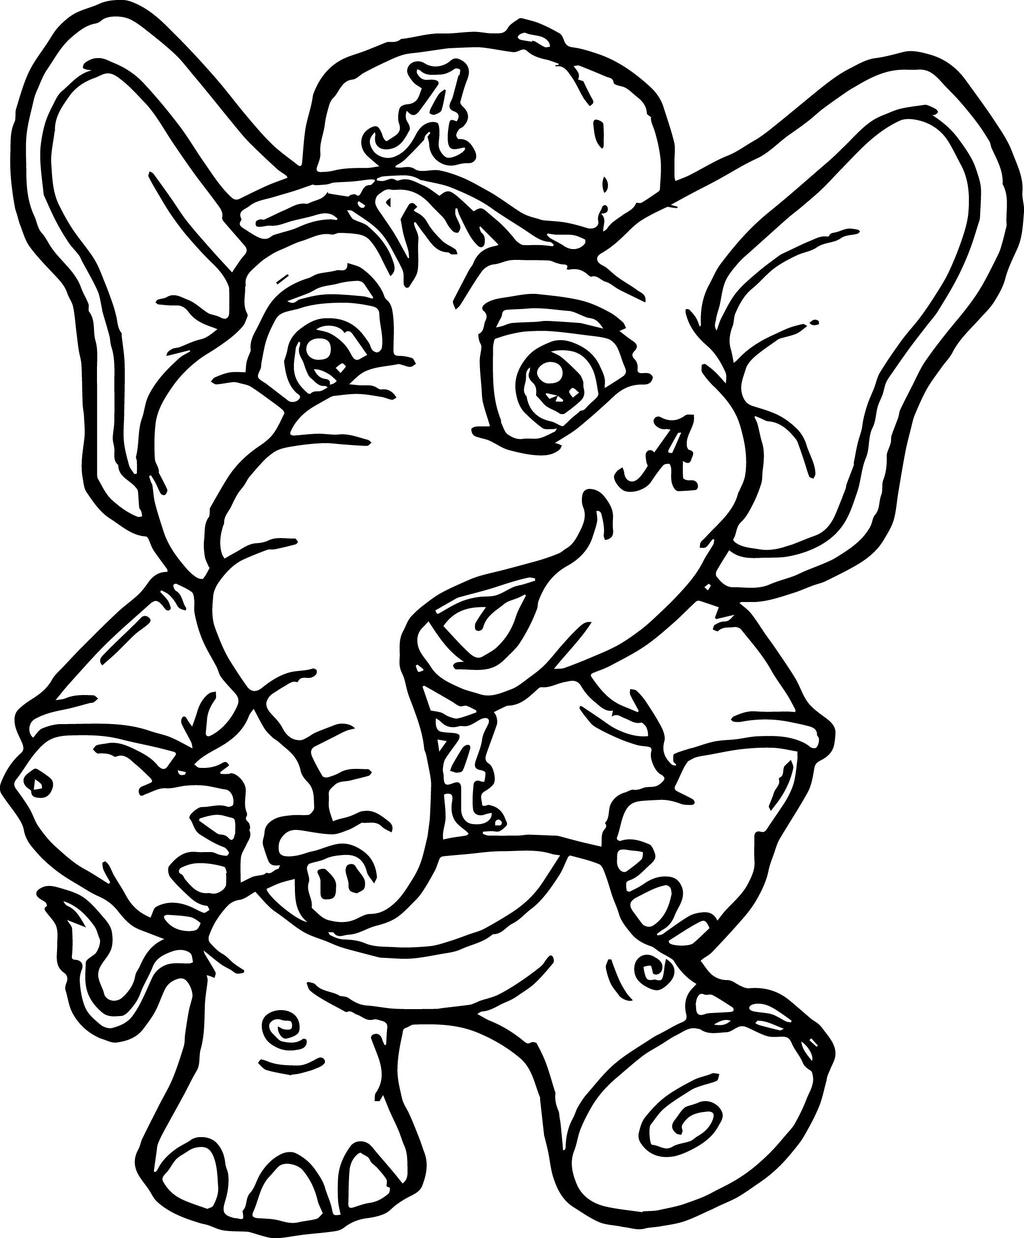 Free Softball Coloring Pages Elephant Logo printable